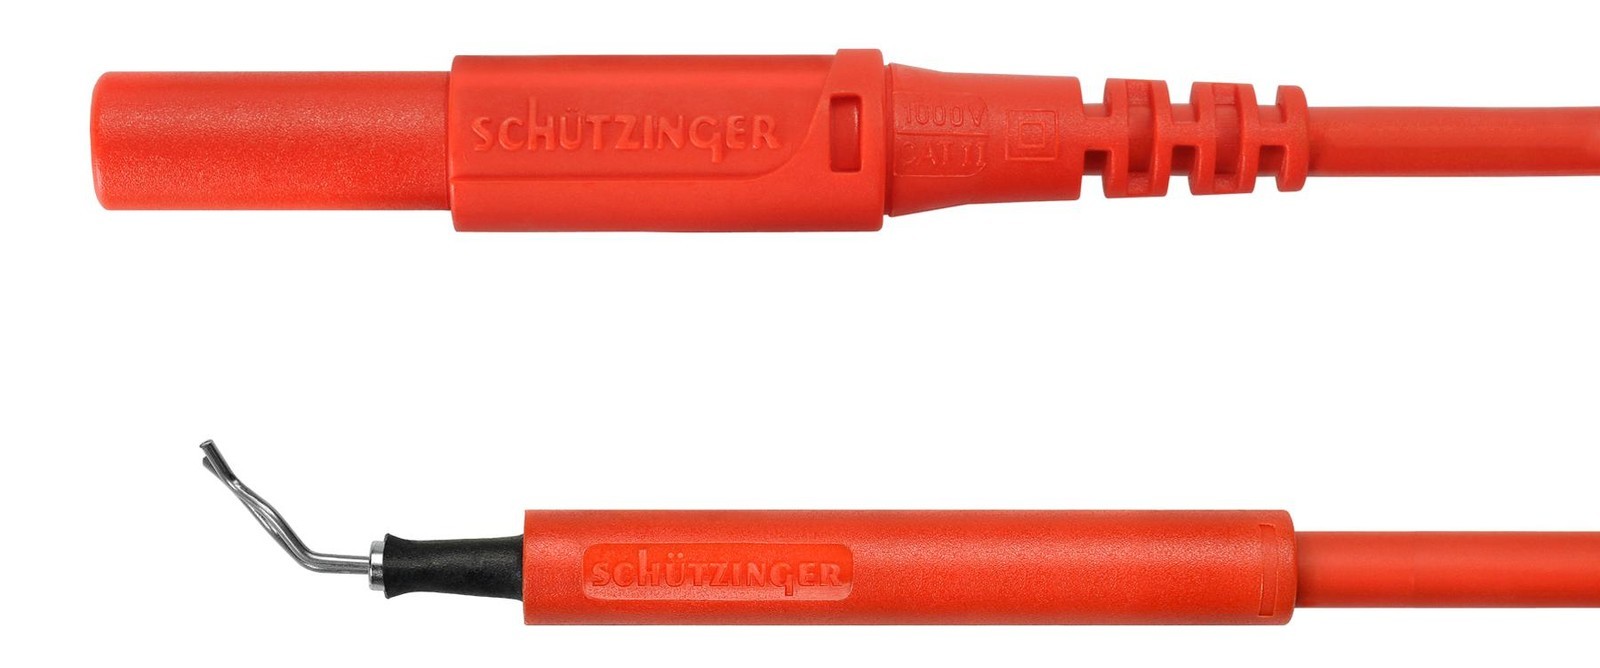 Schutzinger Al 8322 / Zpk / 1 / 50 / Rt Test Lead, 4mm Jack-Test Clip, 500mm